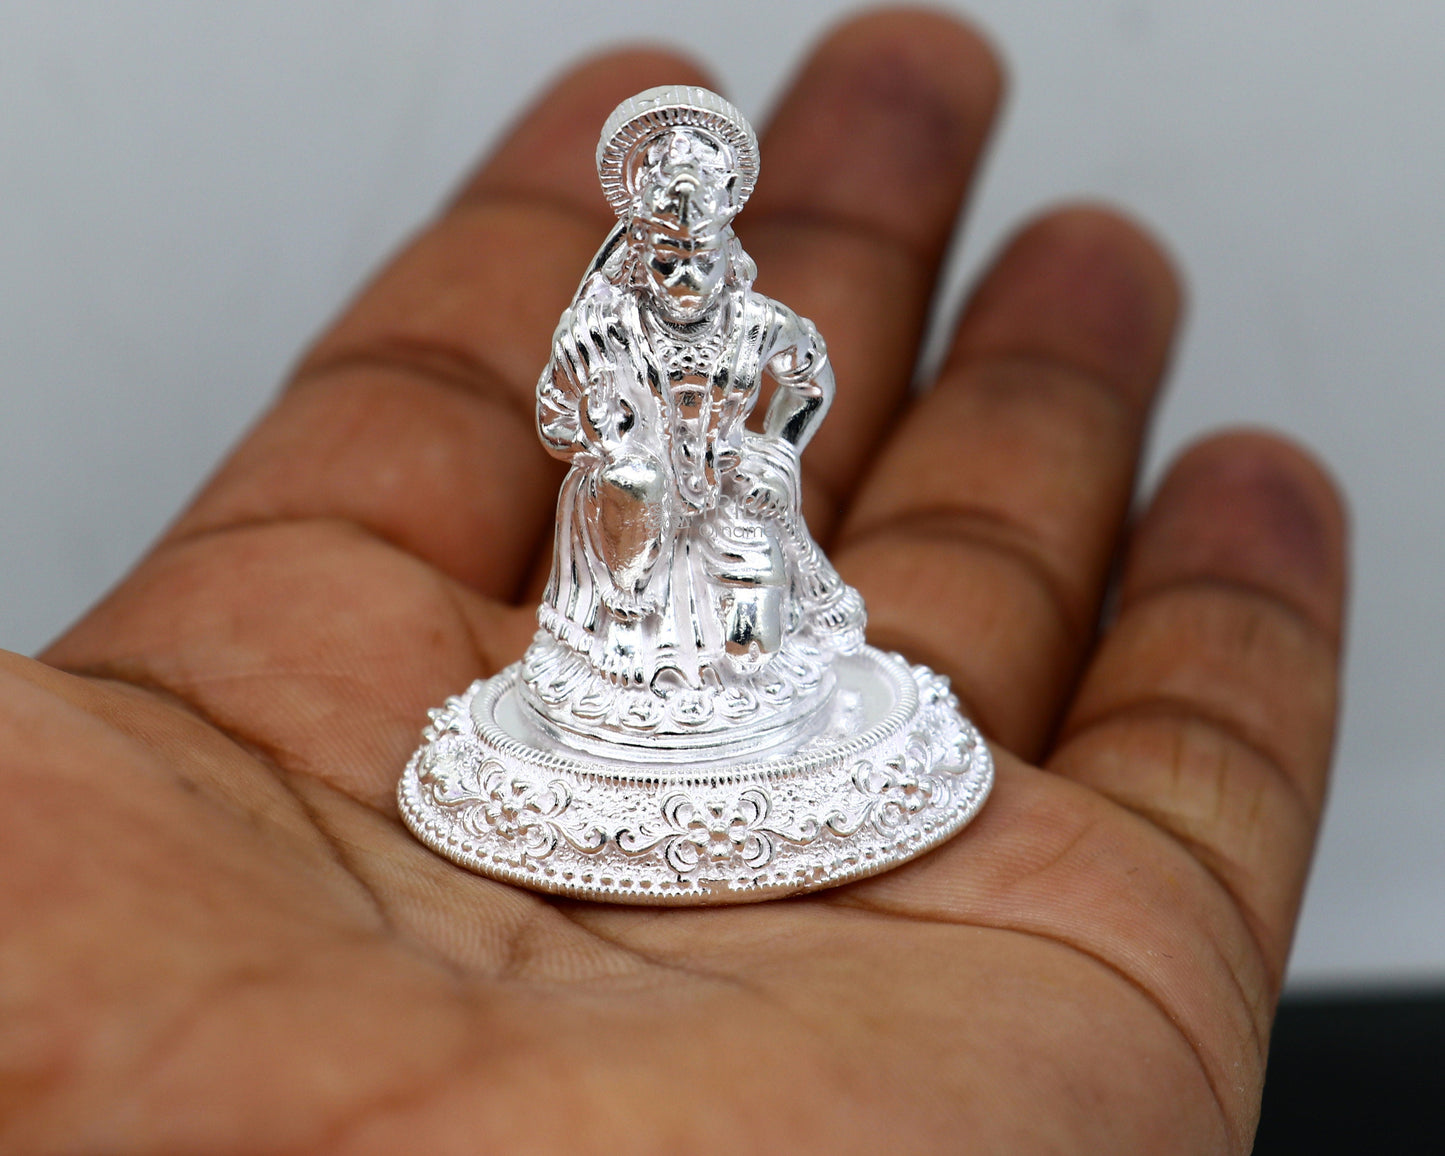 925 silver handmade Lord hanuman 1.6" small statue, best puja or gifting god hanuman statue sculpture home temple puja art, utensils art602 - TRIBAL ORNAMENTS